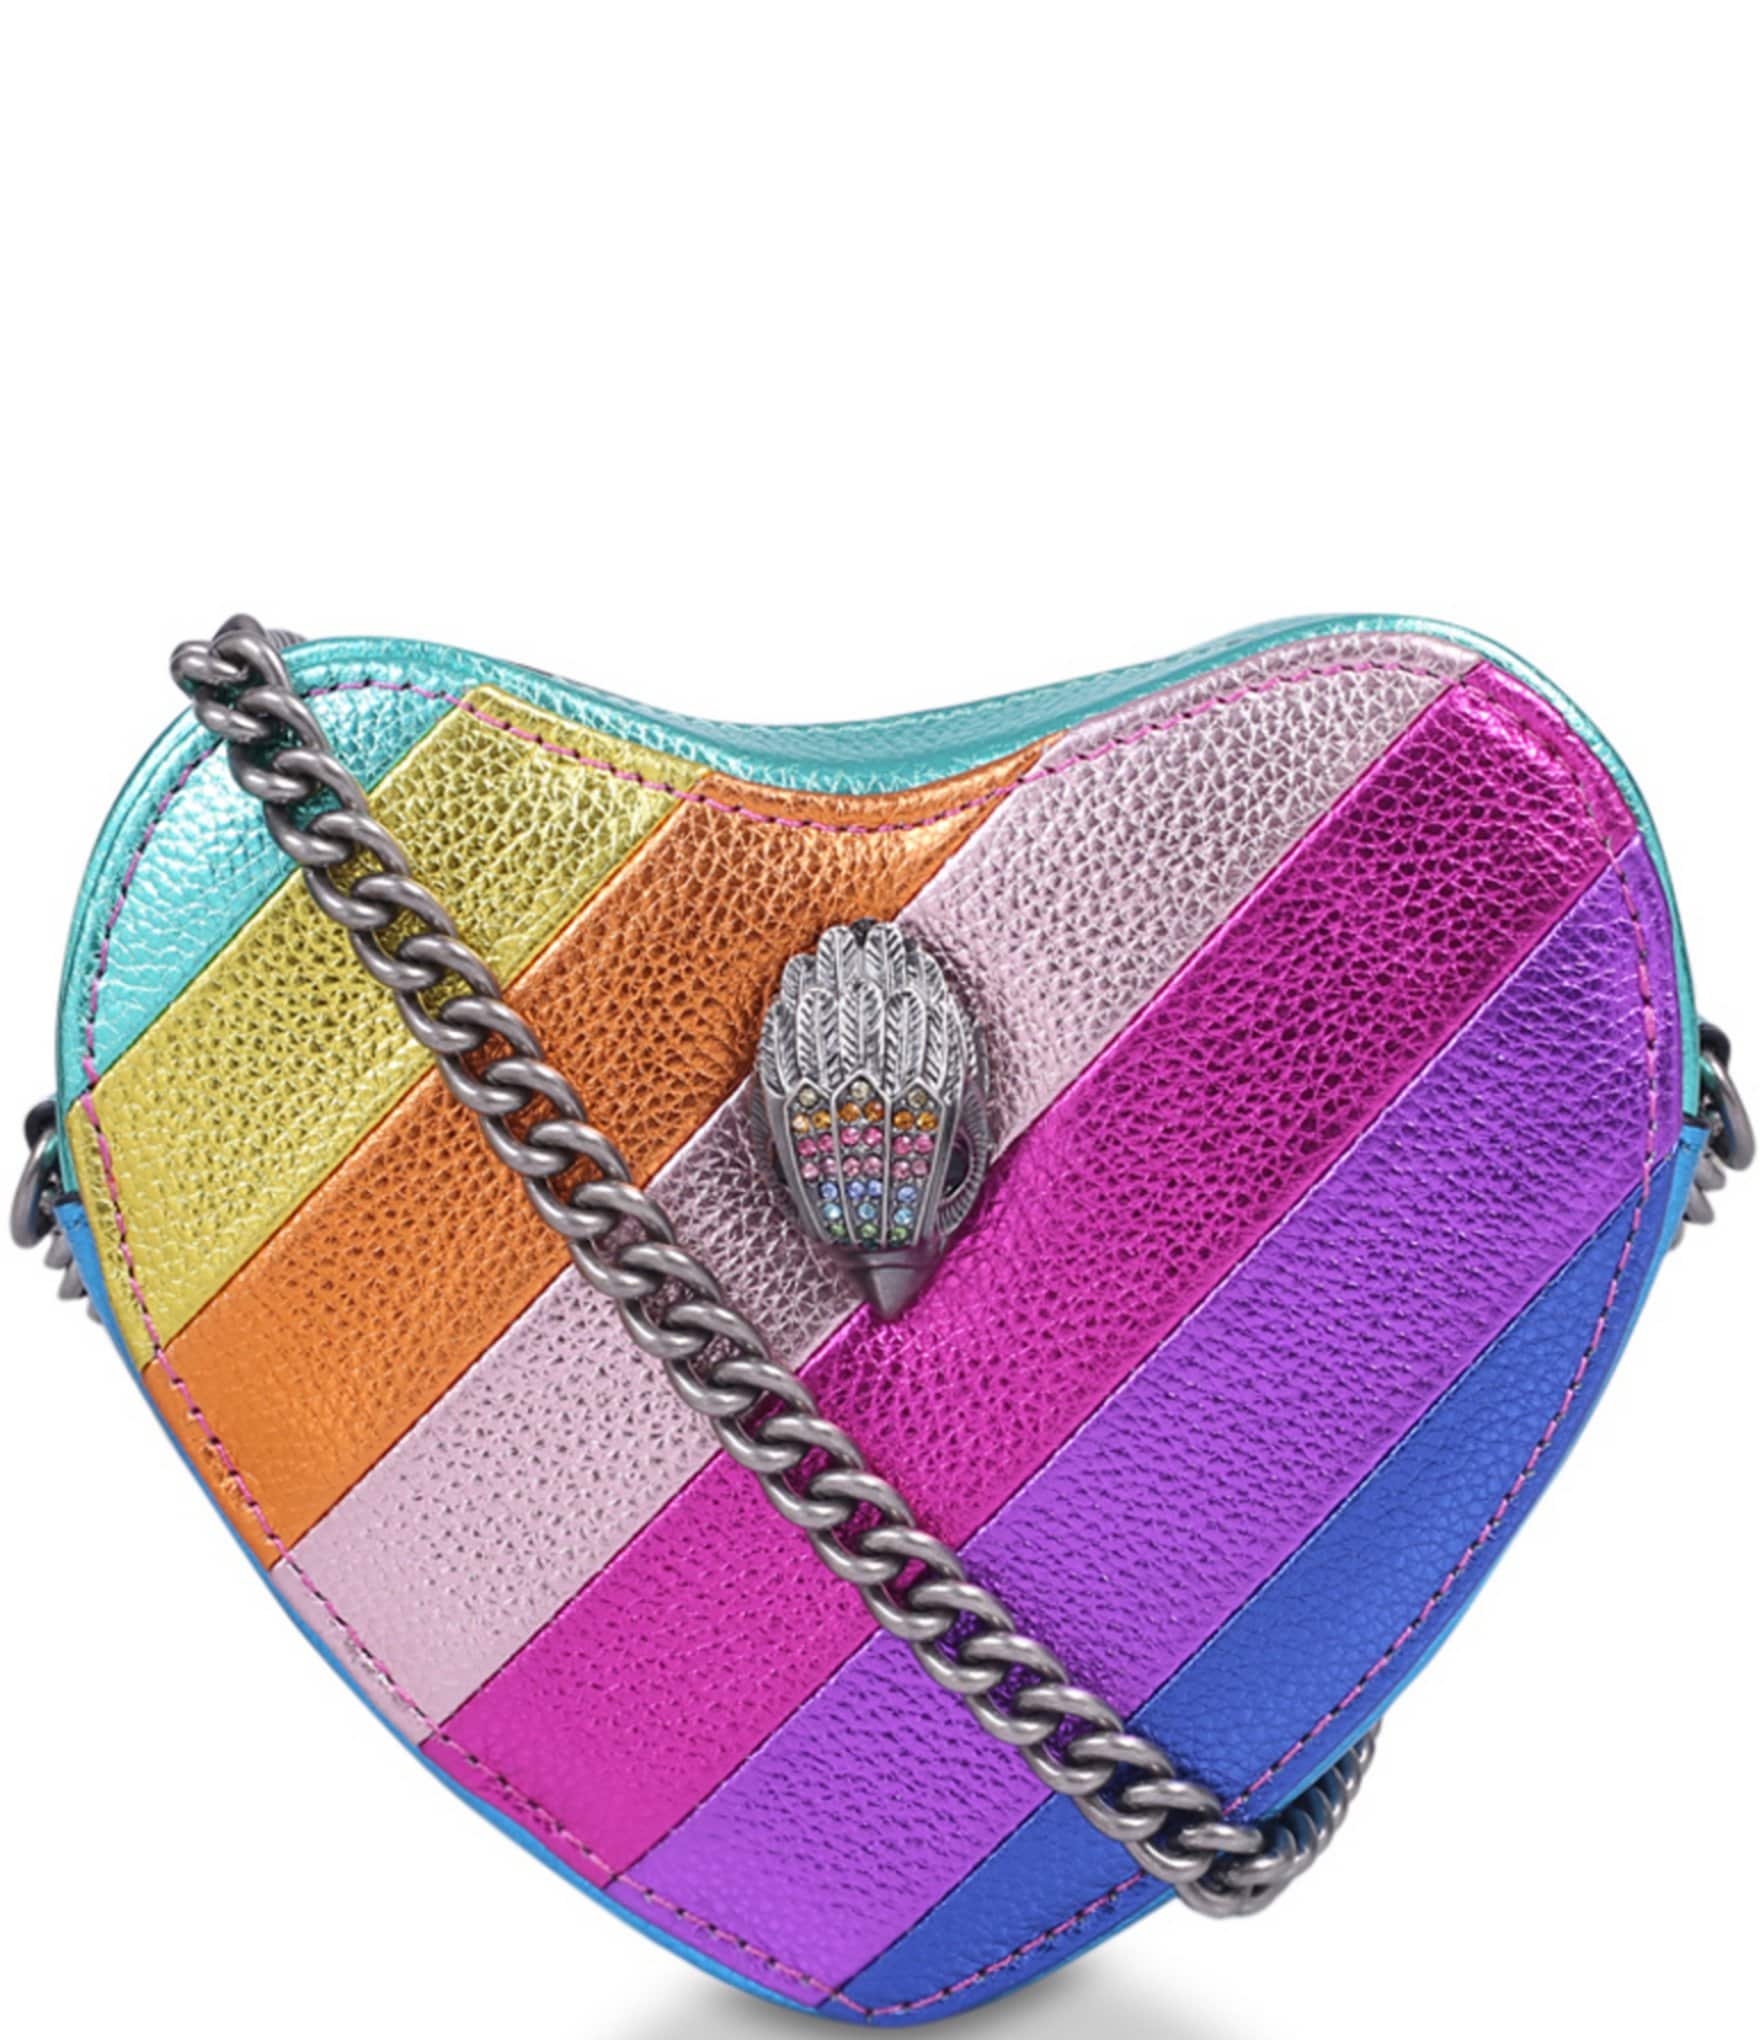 Kurt Geiger London Kensington Rainbow Heart Crossbody Bag - Multi